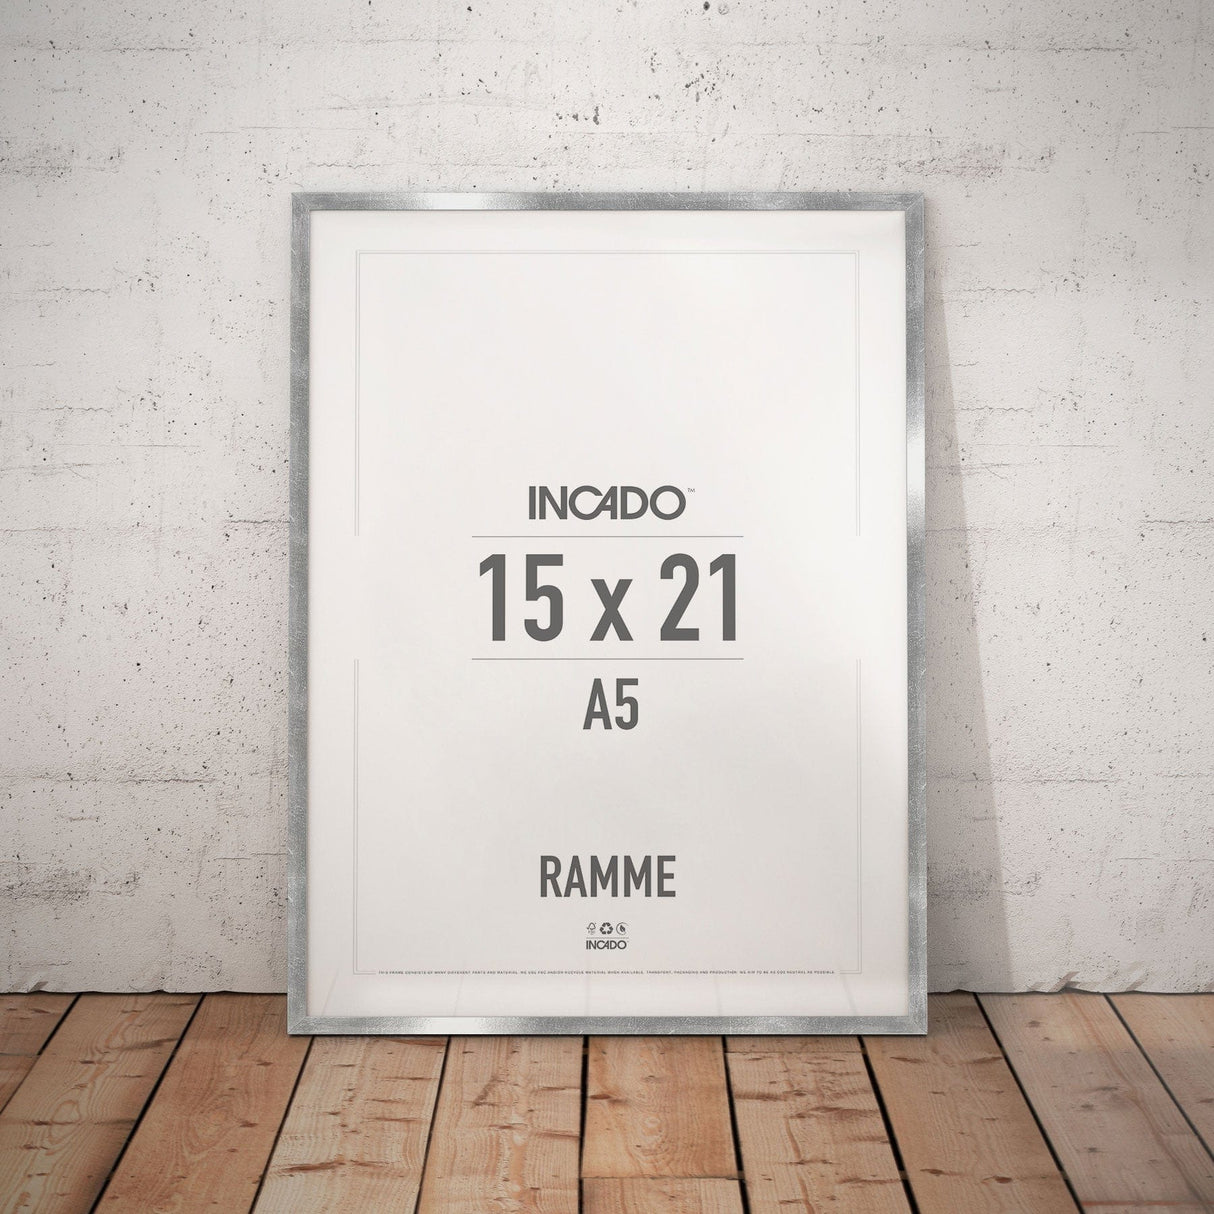 Sølv Ramme - Incado NordicLine - 15 x 21 cm